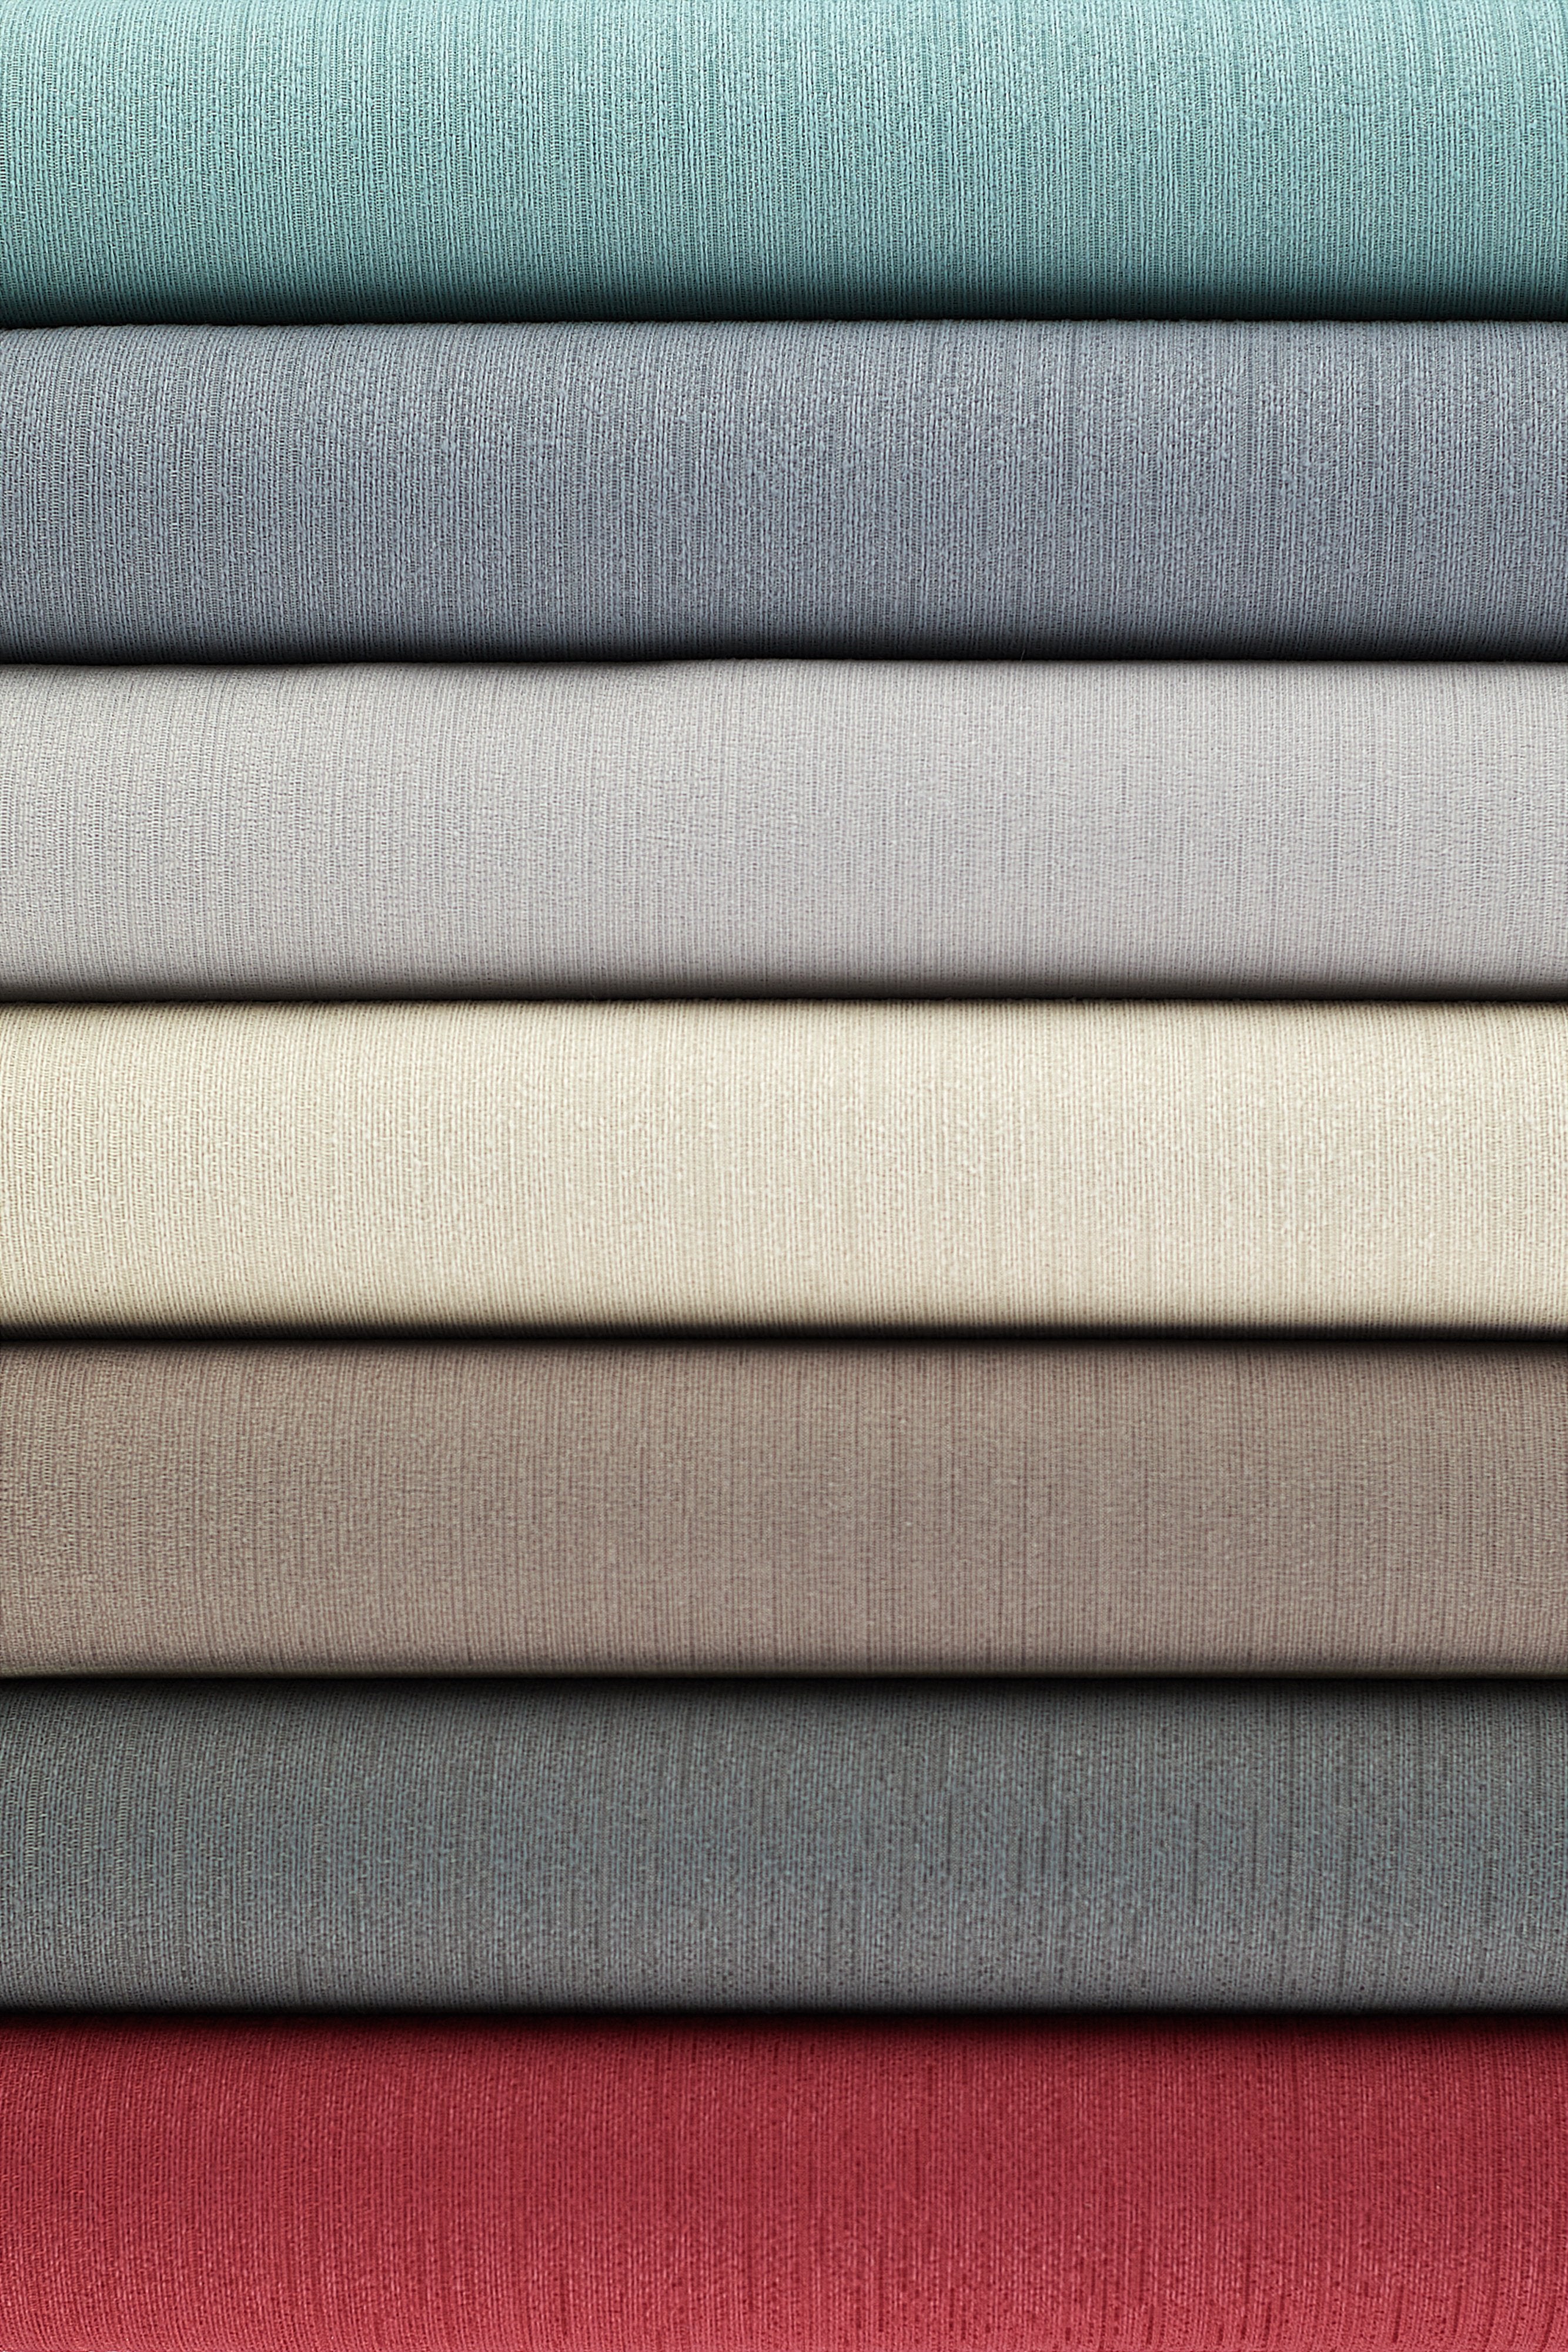 McAlister Textiles Sakai Graphite FR Plain Fabric Fabrics 